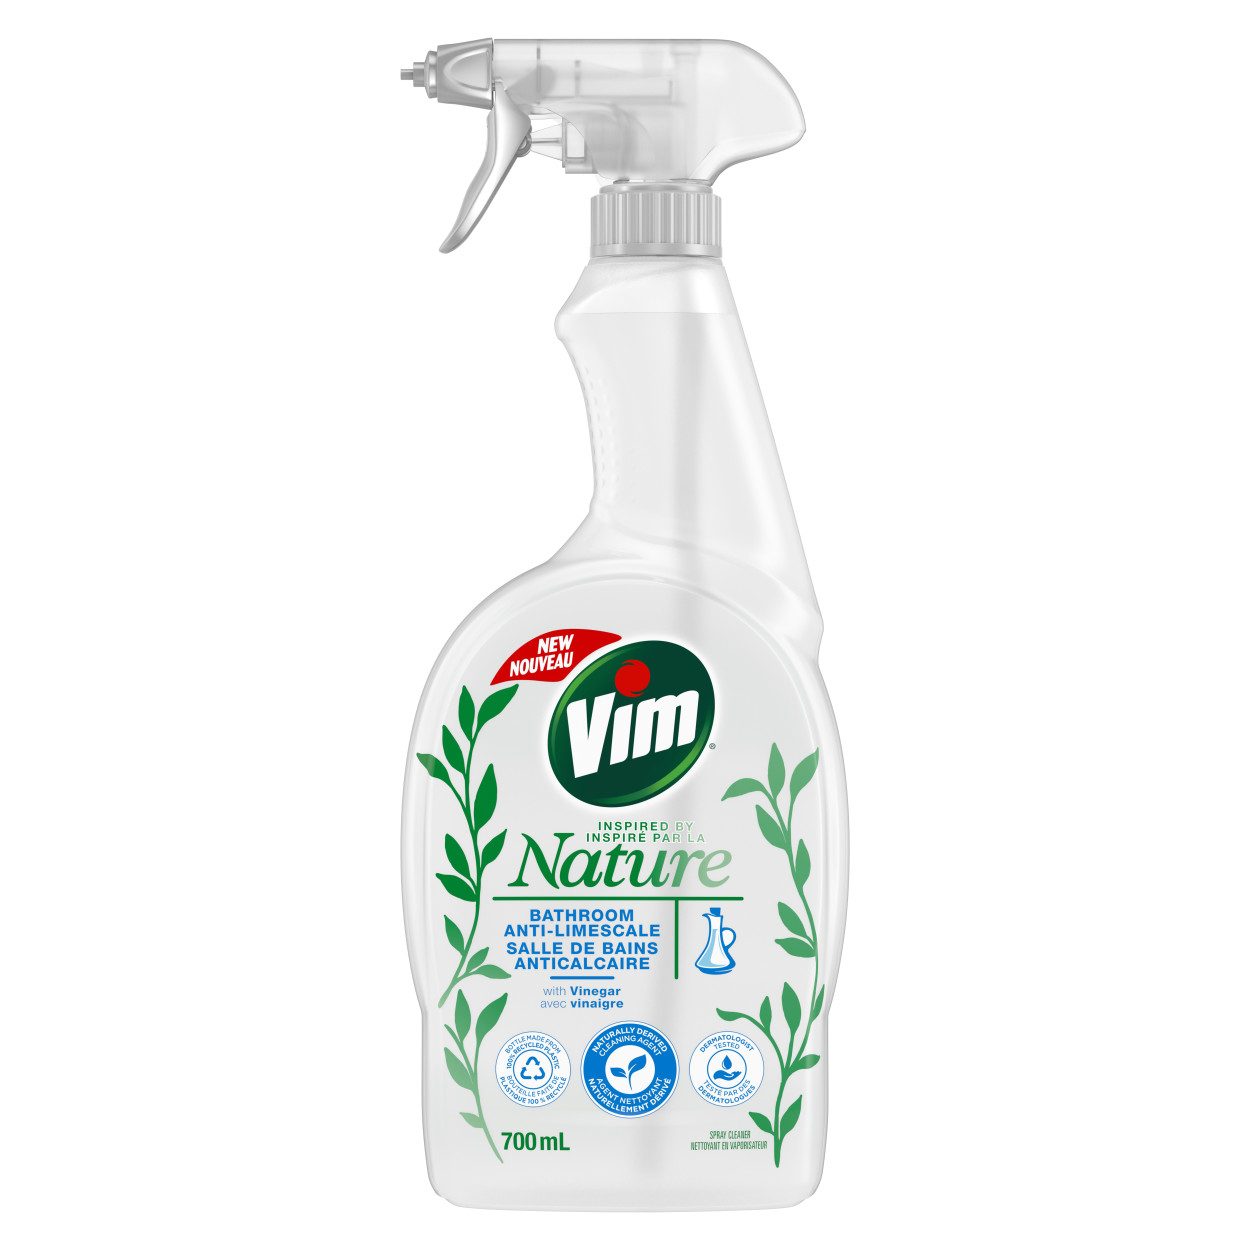 Vim® Inspired by Nature Bathroom Anti-Limescale Spray with Vinegar packshot